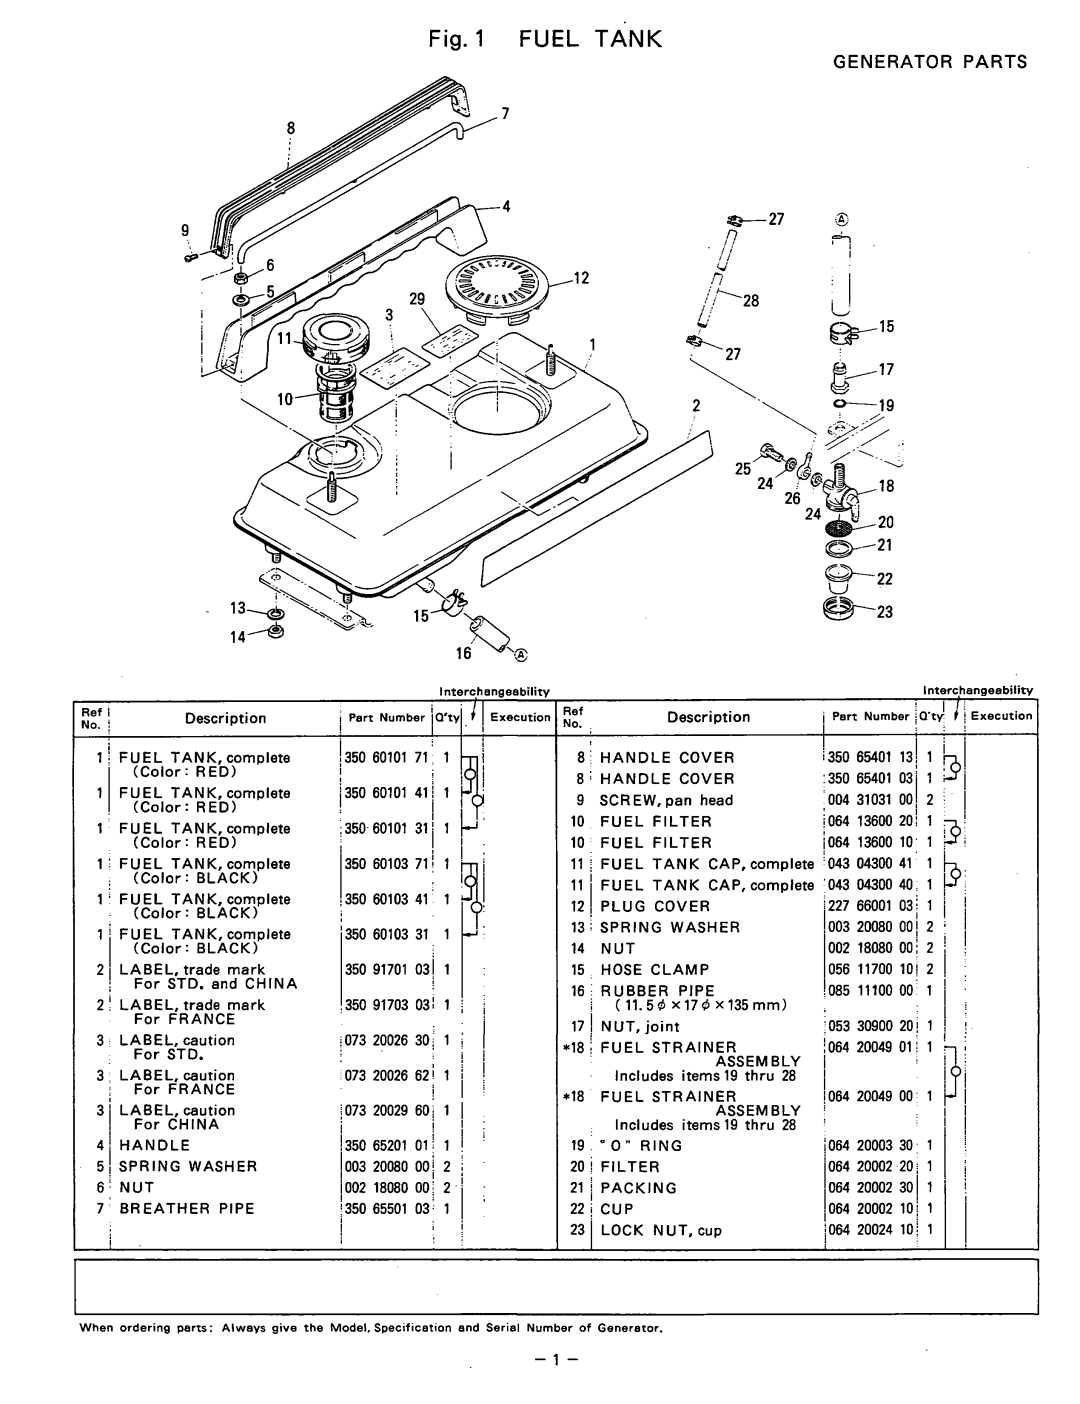 Subaru Robin Power Products R1200 manual Fuel Tank, Generator Parts 